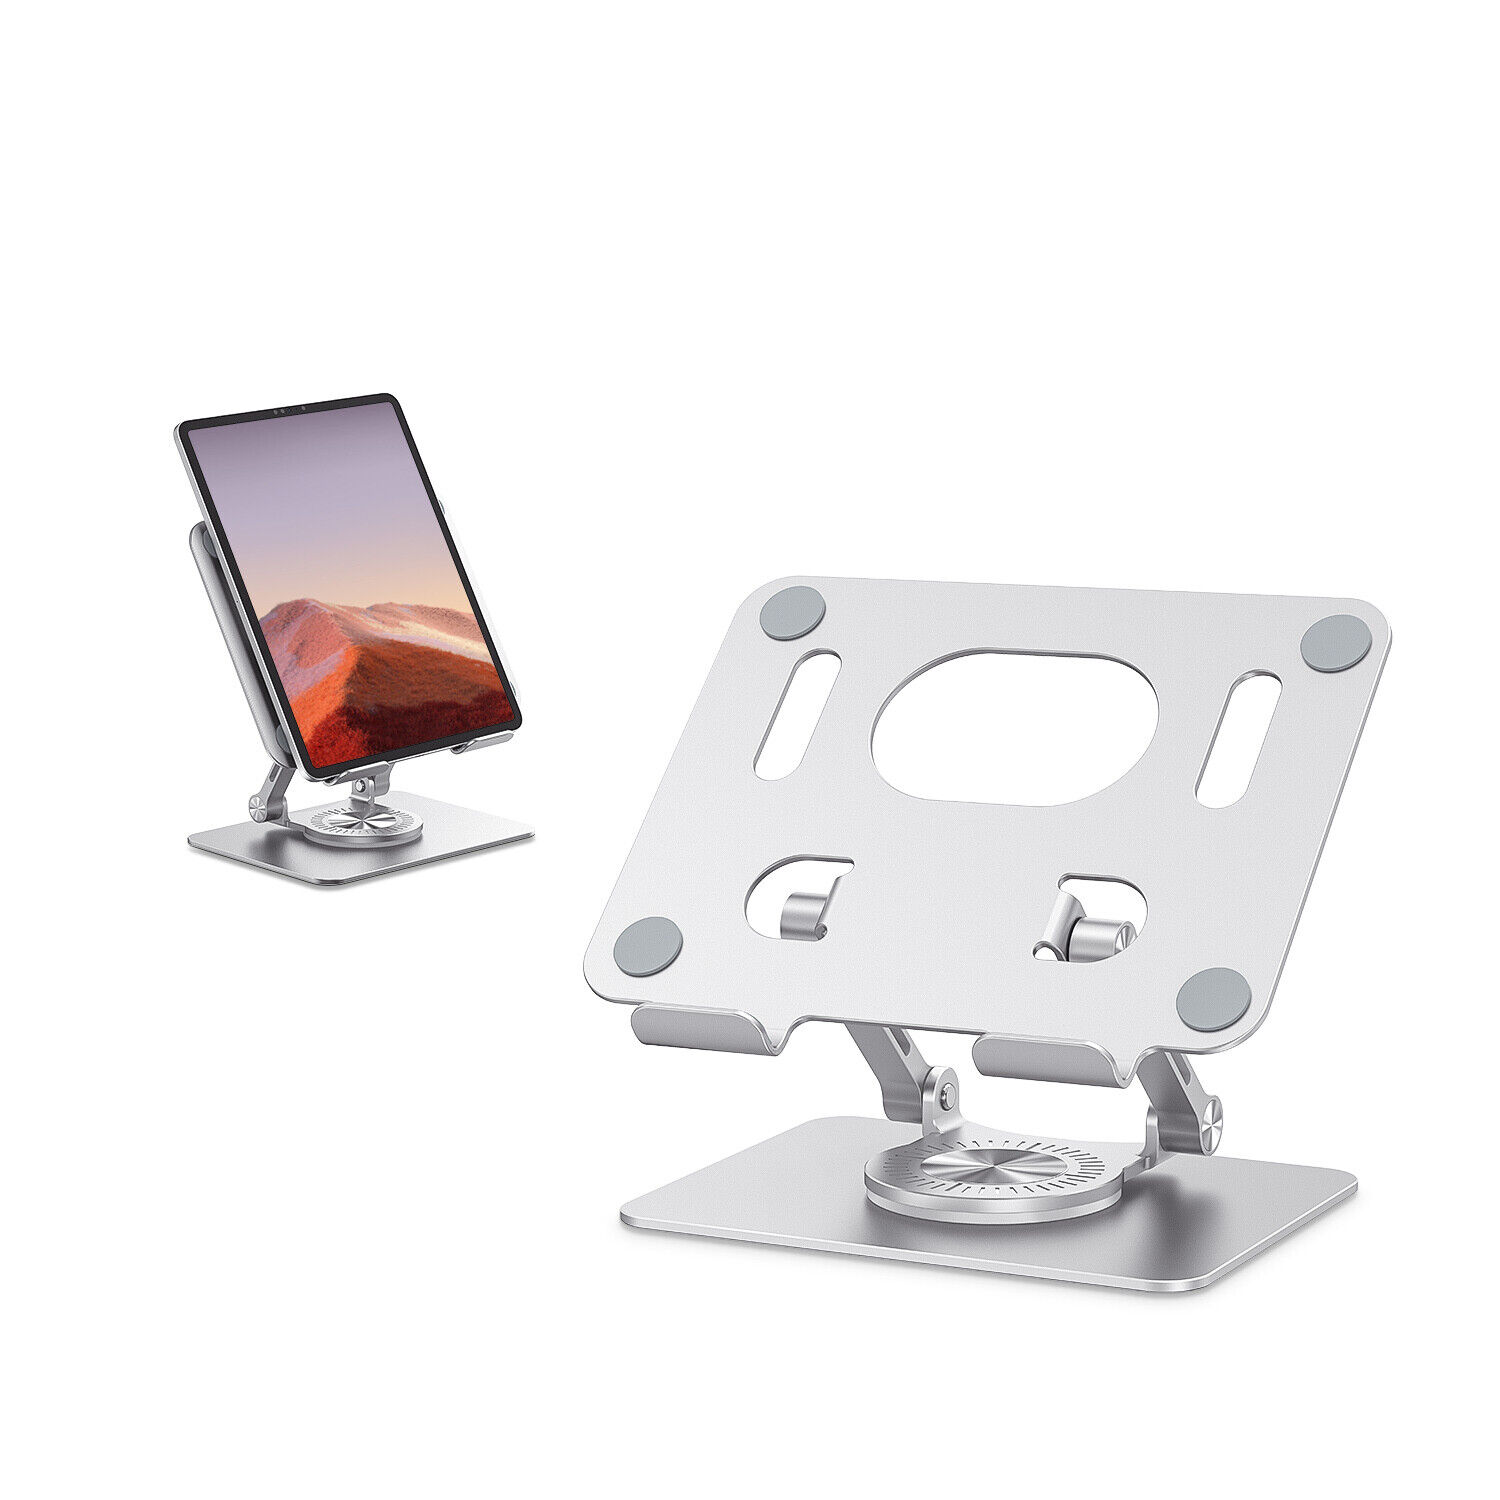 Kootion Universal adjustable 360° Metal Stand Holder For Iphone Tablet ipad USA 